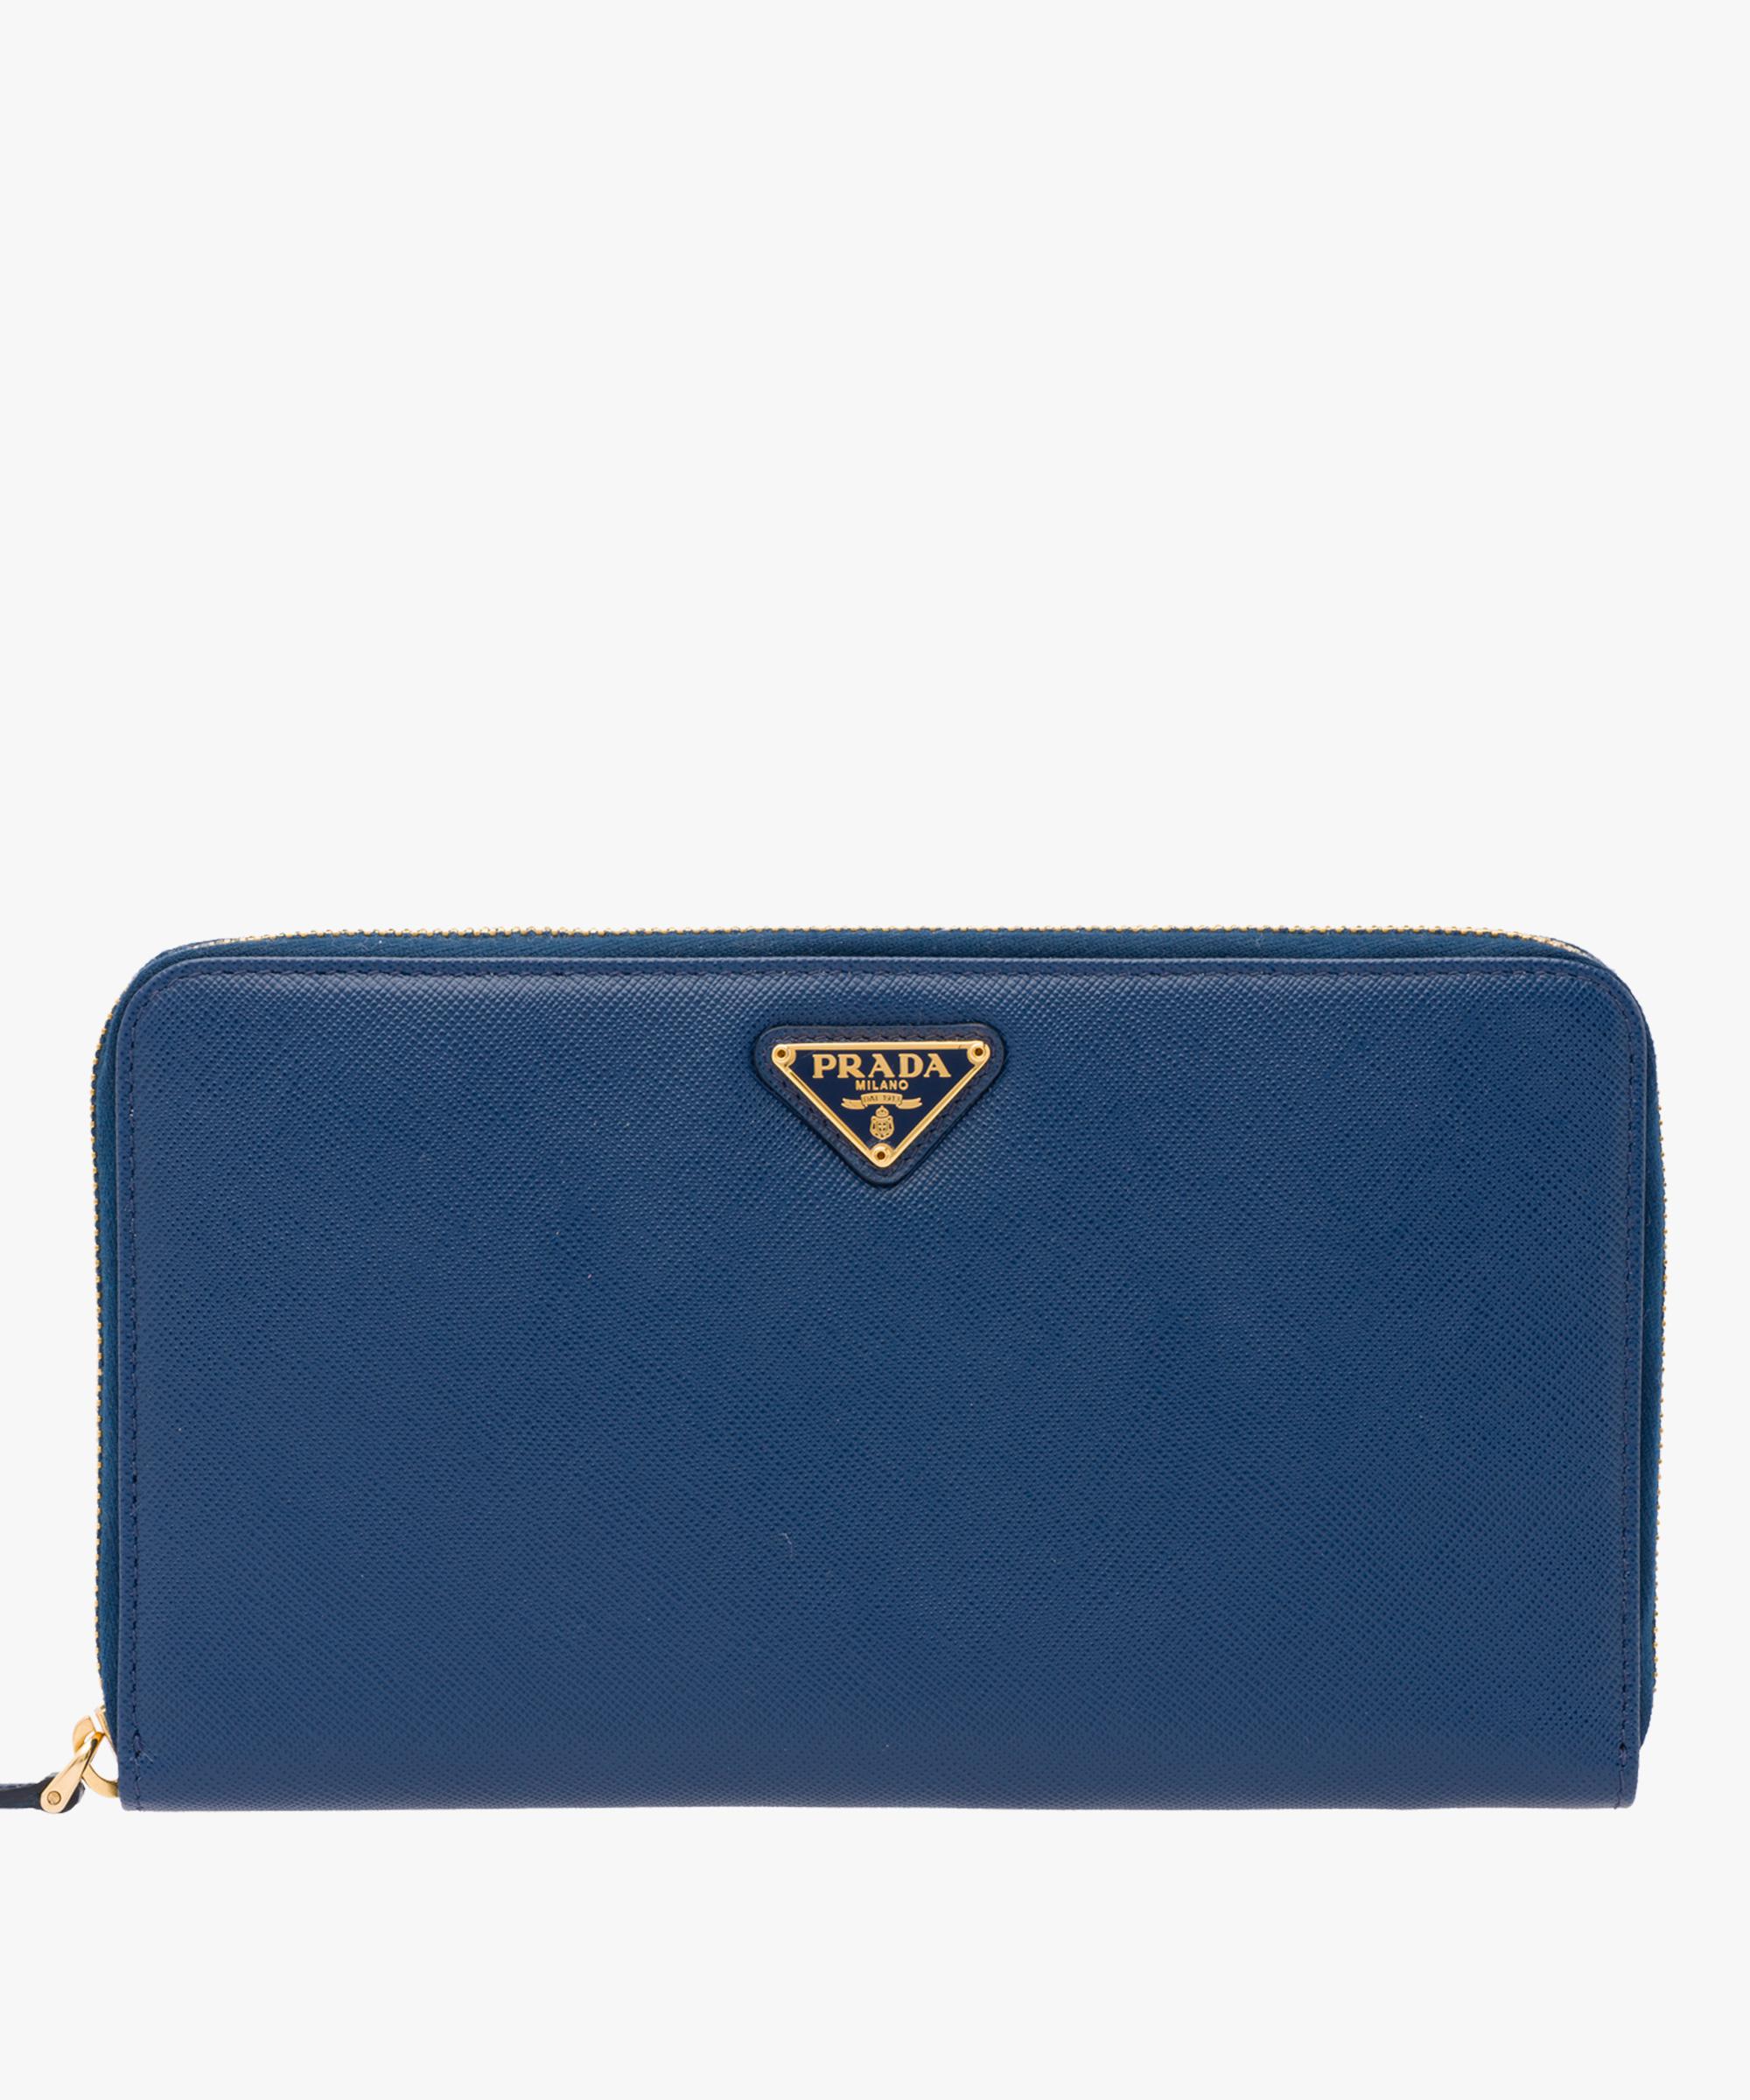 Prada Large Saffiano Leather Wallet in Cornflower Blue (Blue) - Lyst